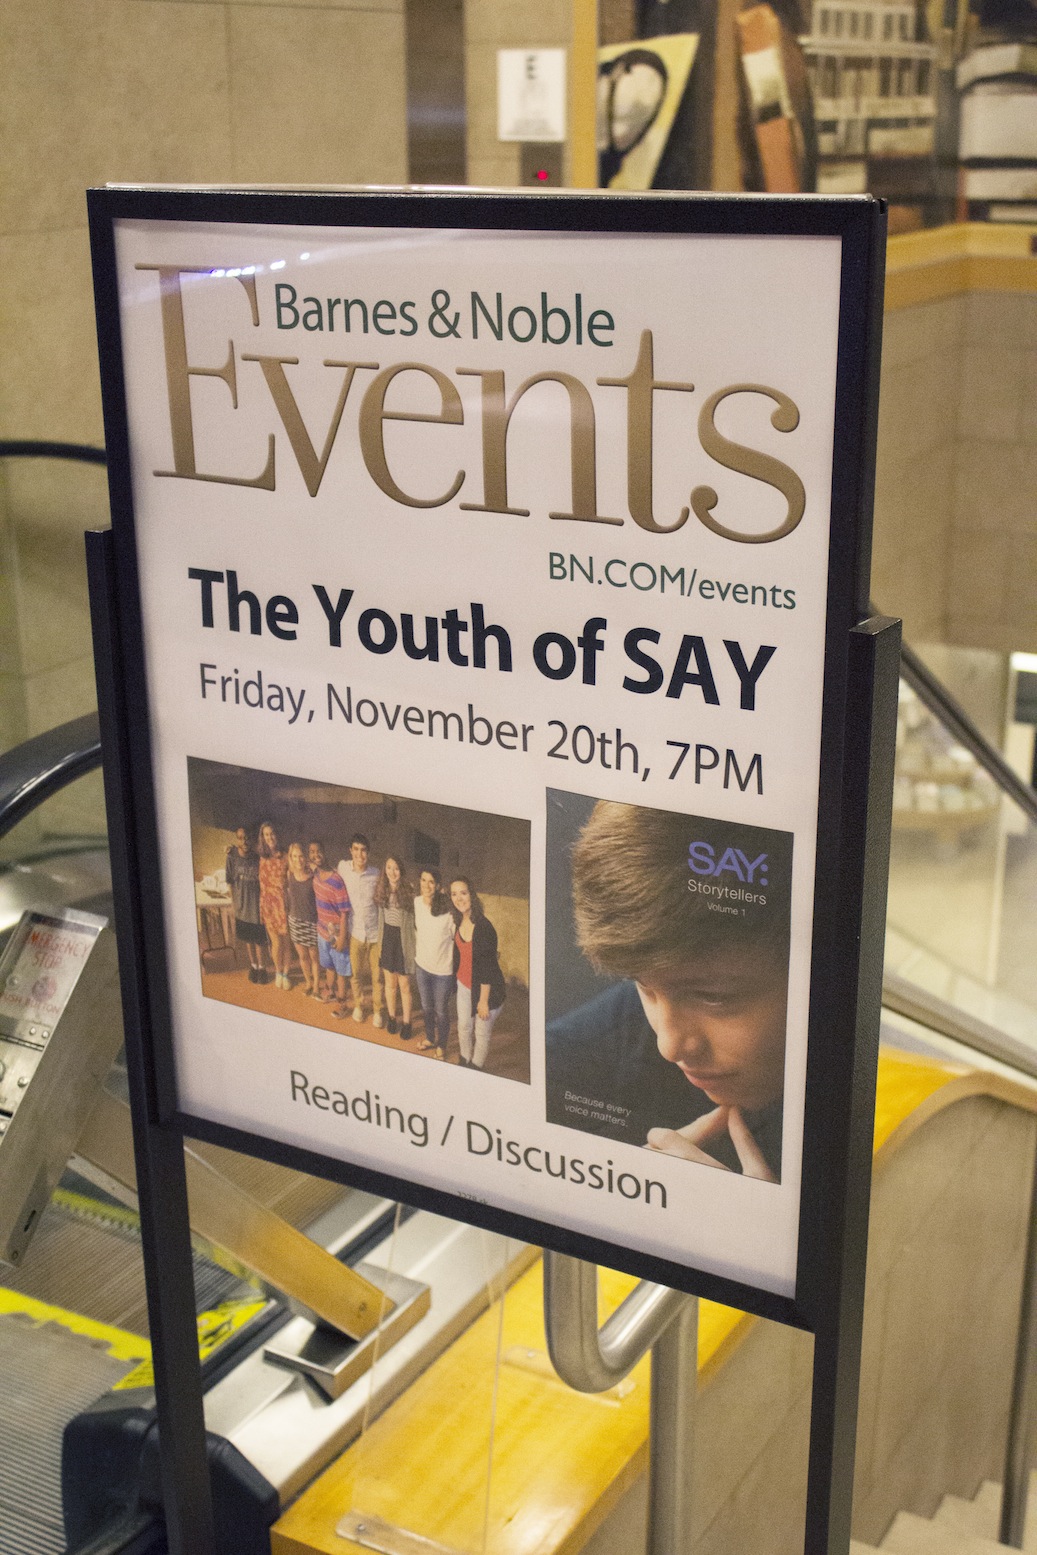 Barnes & Noble event